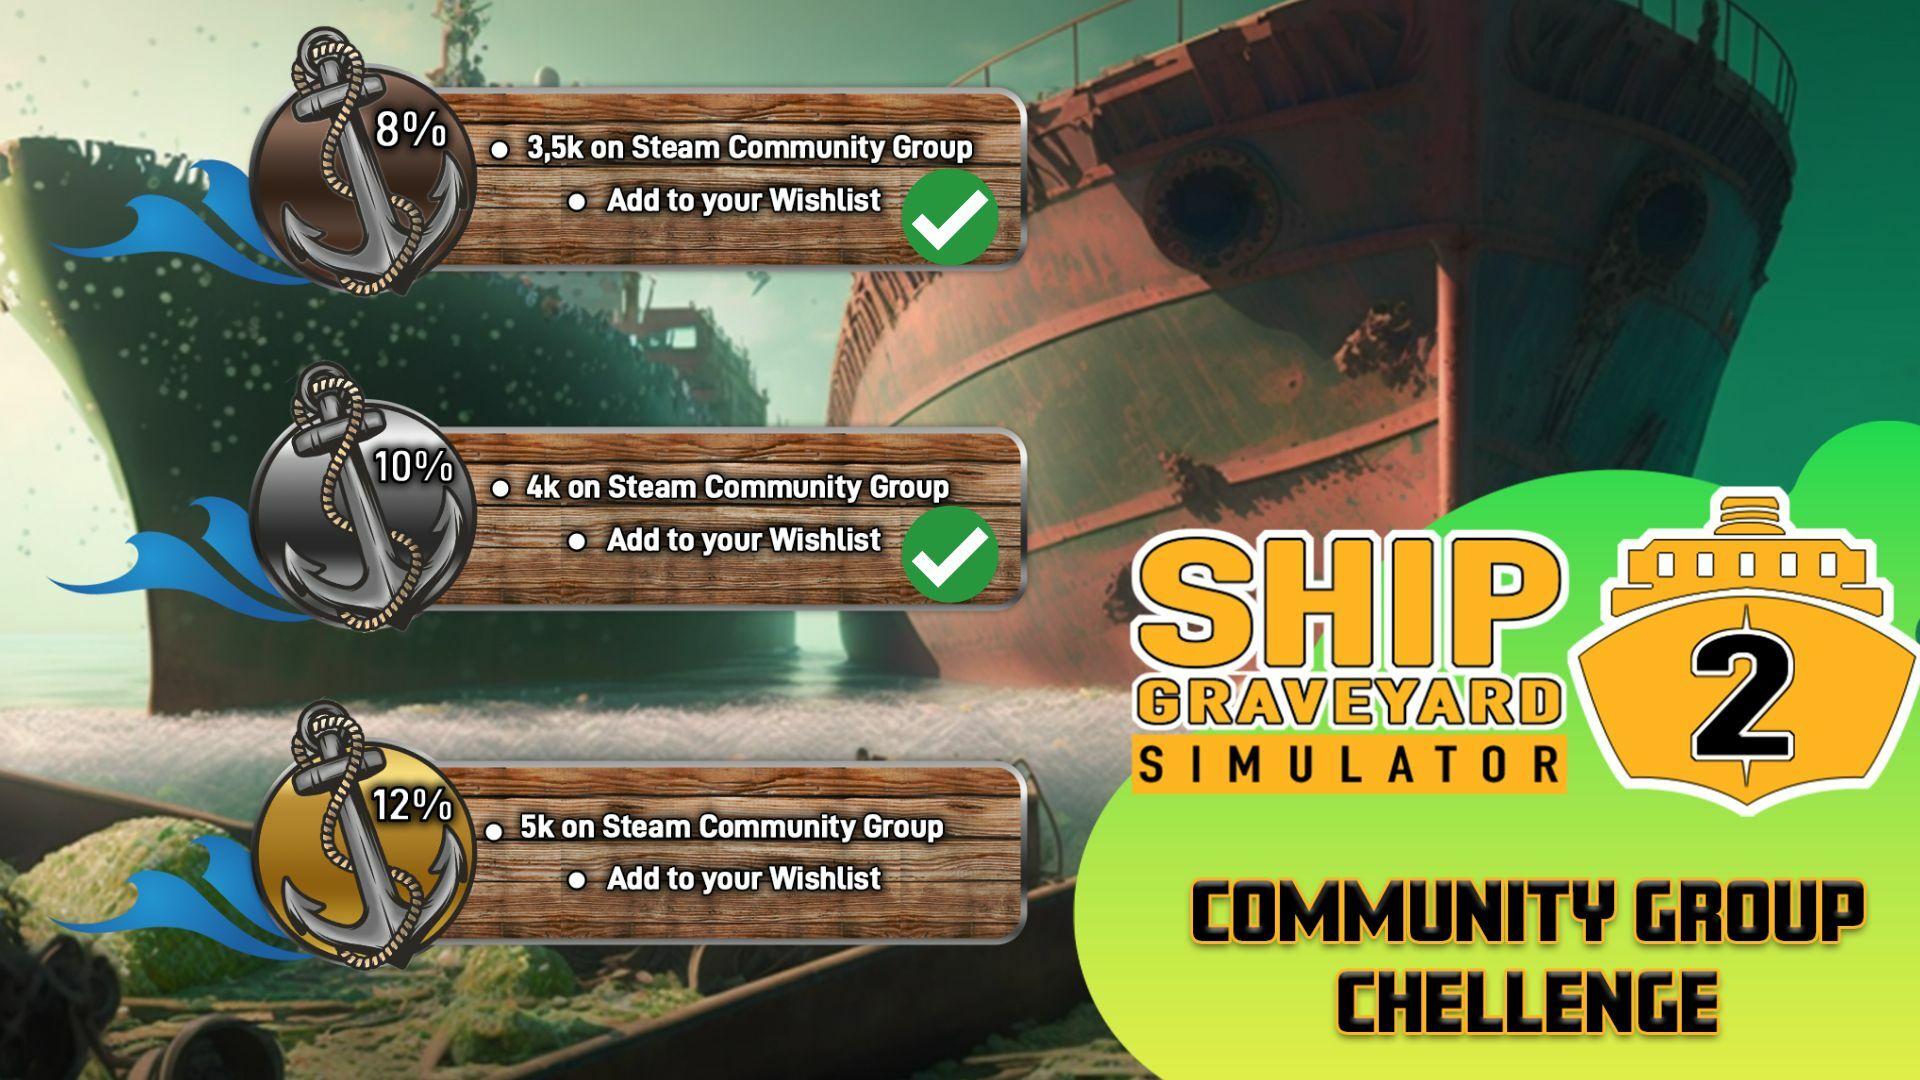 Steam Community :: Sea of Thieves